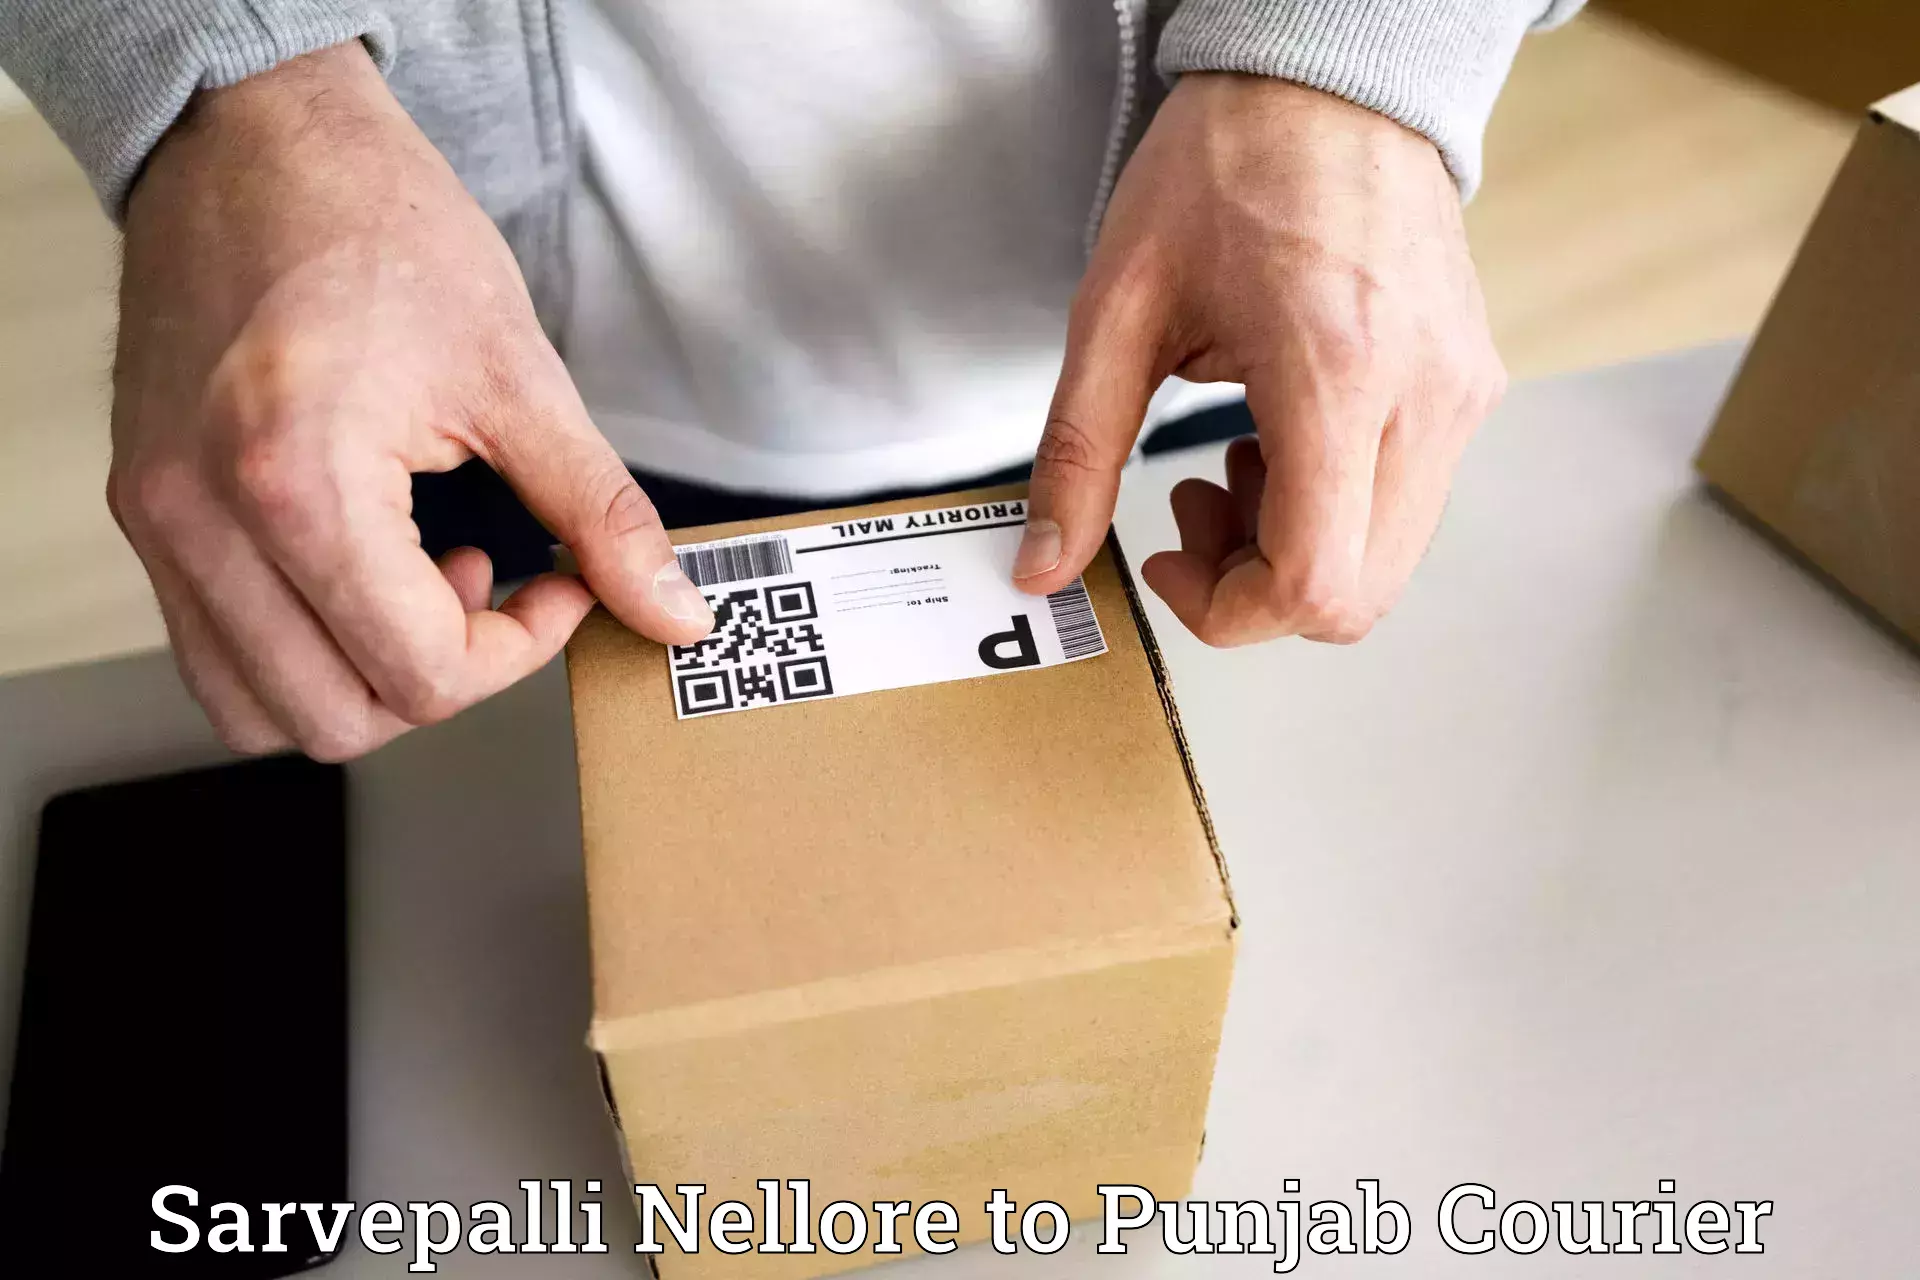 Global logistics network Sarvepalli Nellore to Bathinda